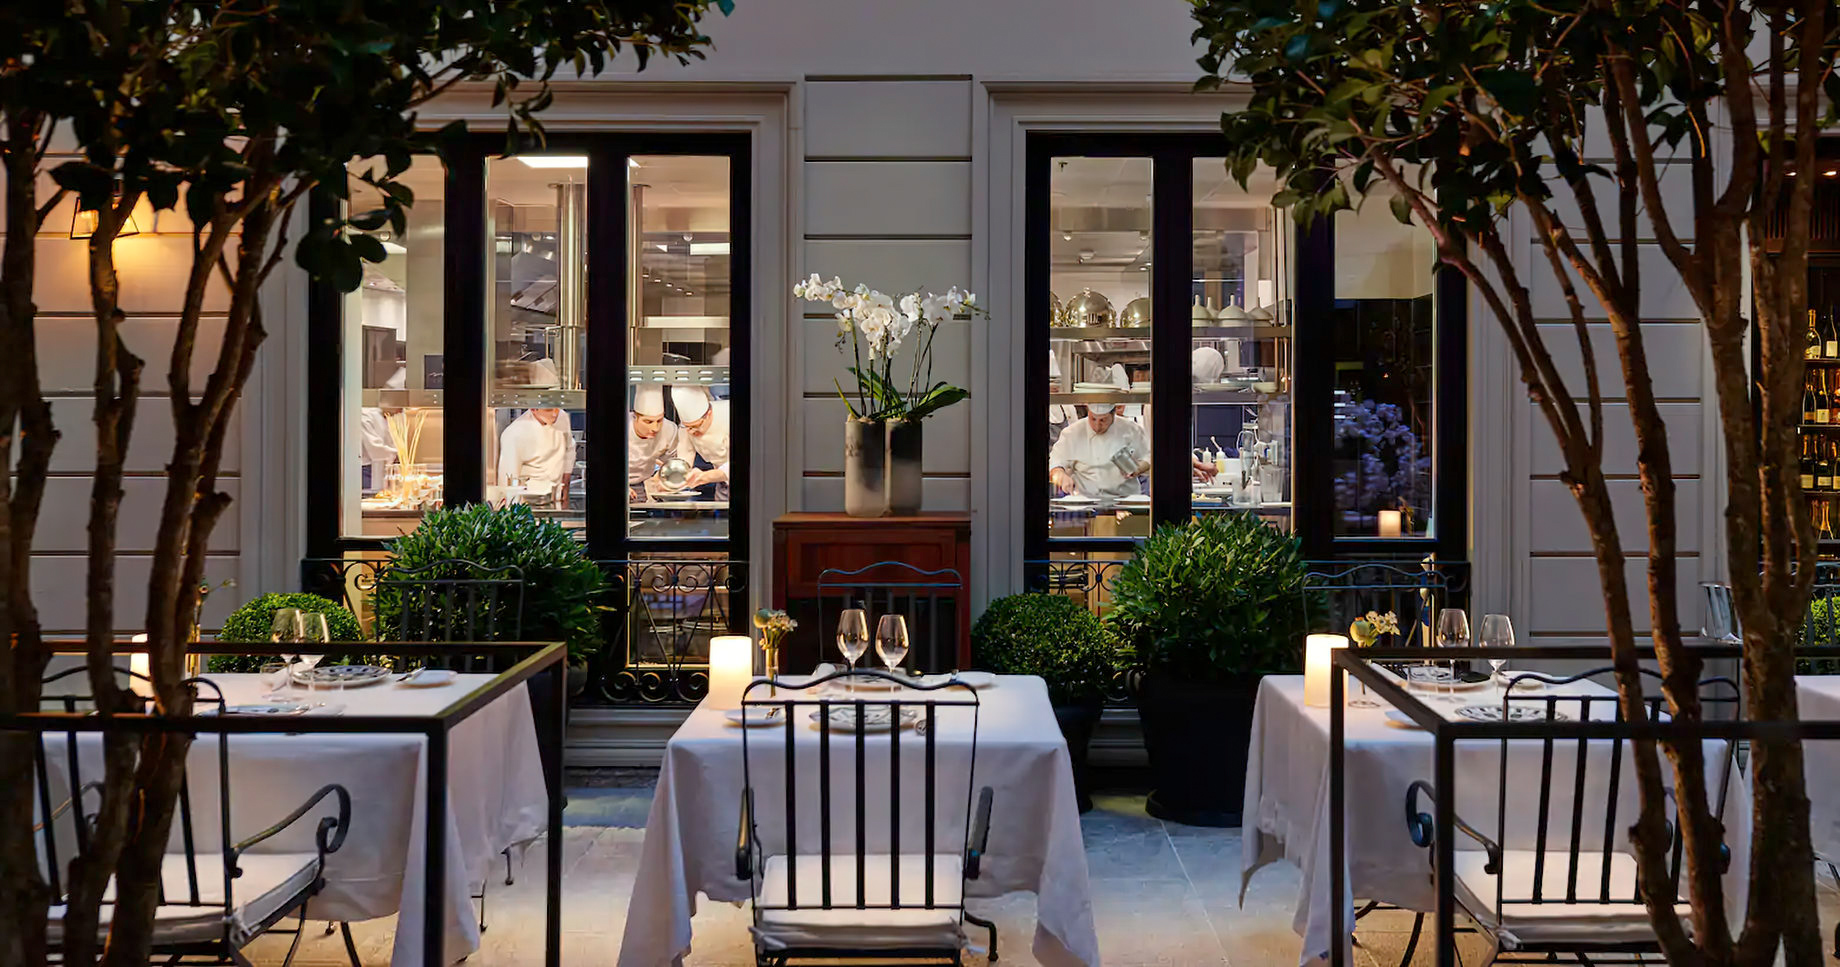 Mandarin Oriental, Milan Hotel – Milan, Italy – Seta Restaurant Courtyard Kitchen